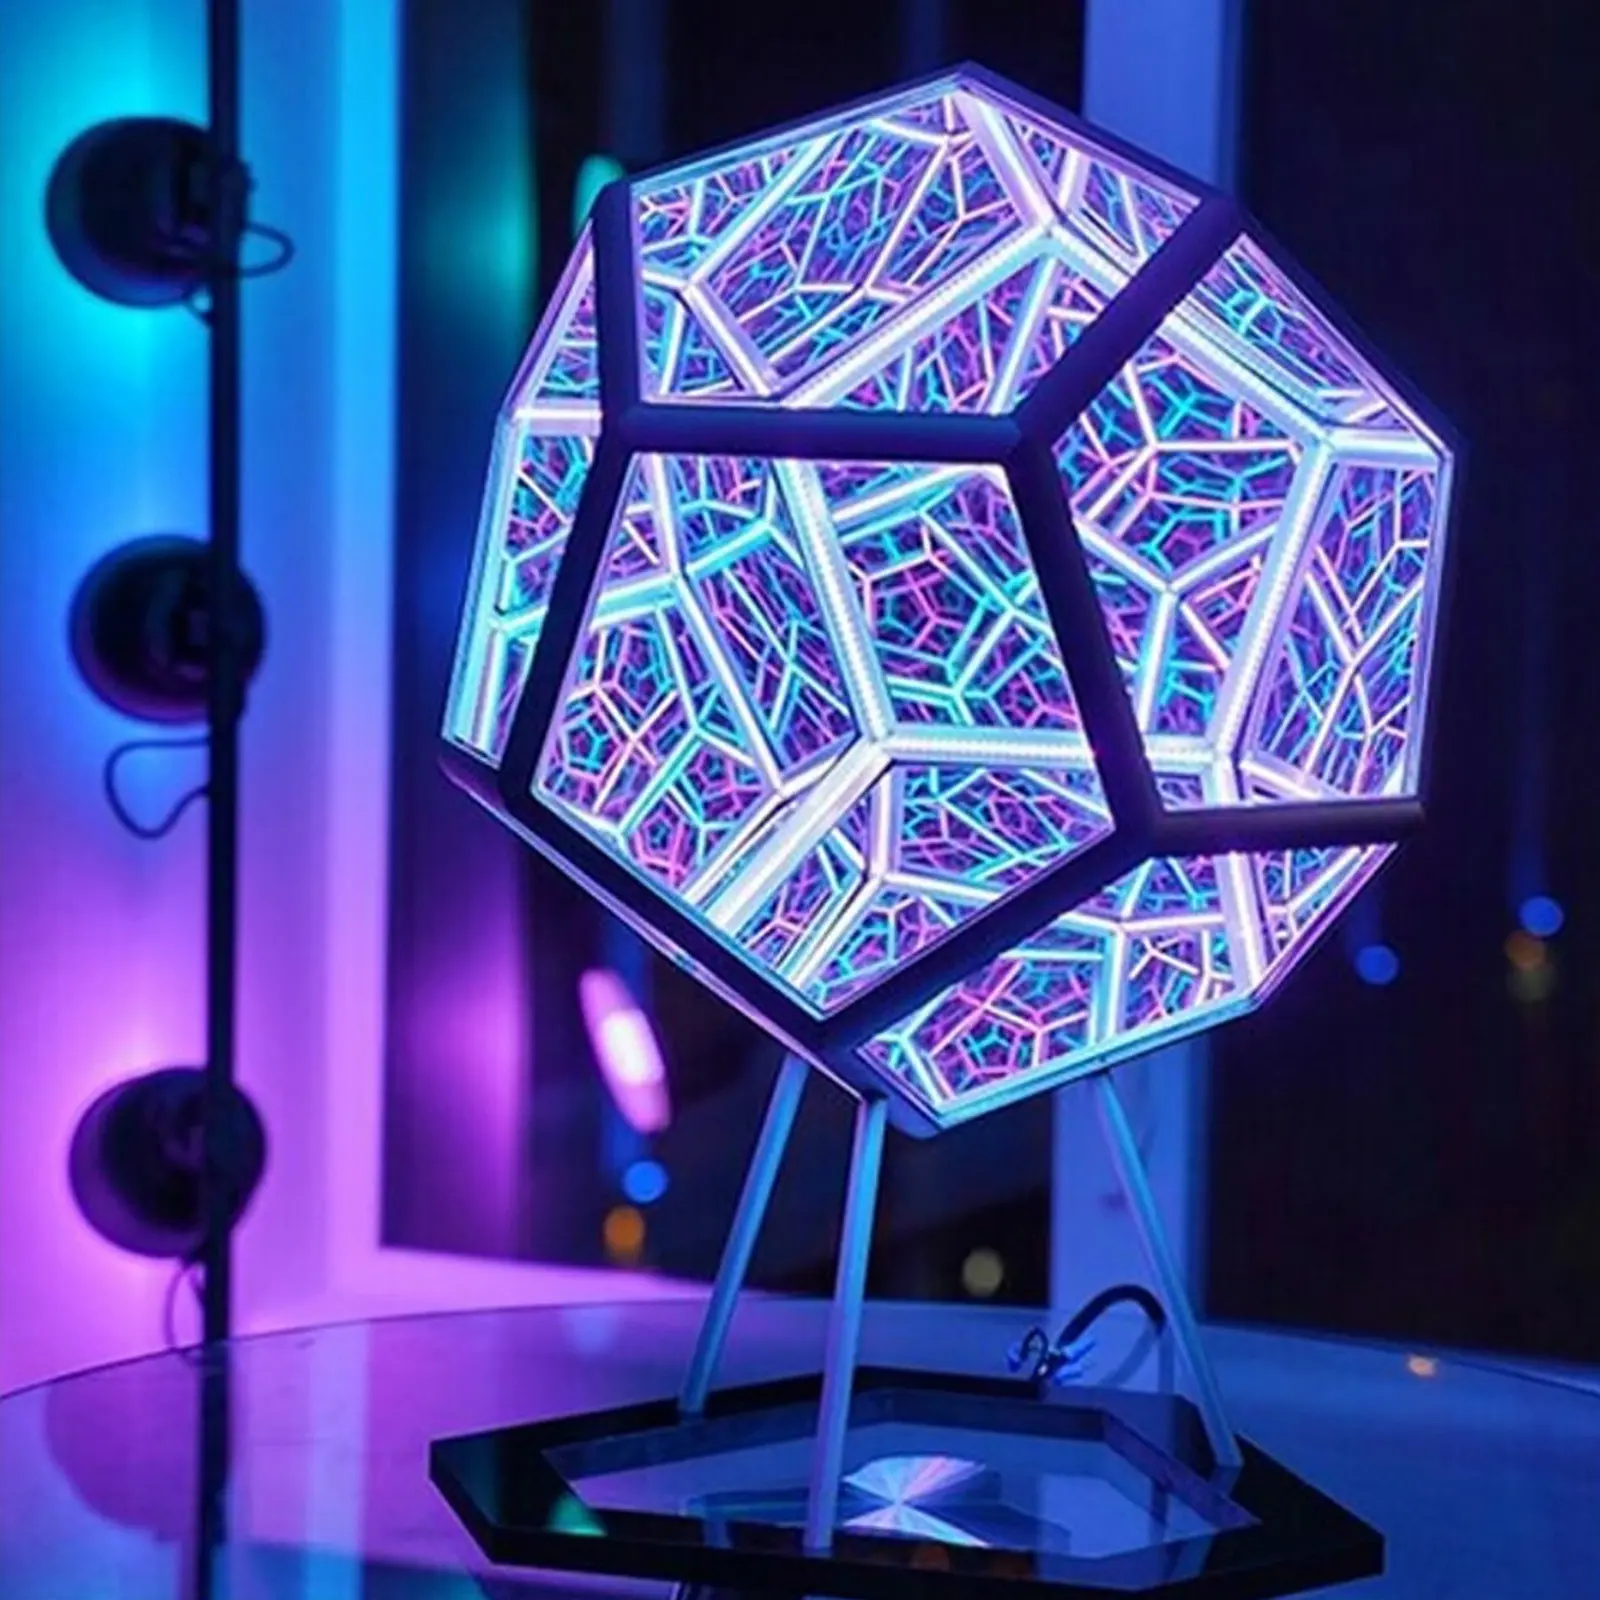 Biumart 새로운 크리 에이 티브 무한 Dodecahedron 컬러 아트 밤 빛 USB 절묘한 멋진 Dodecahedral 컬러 밤 램프